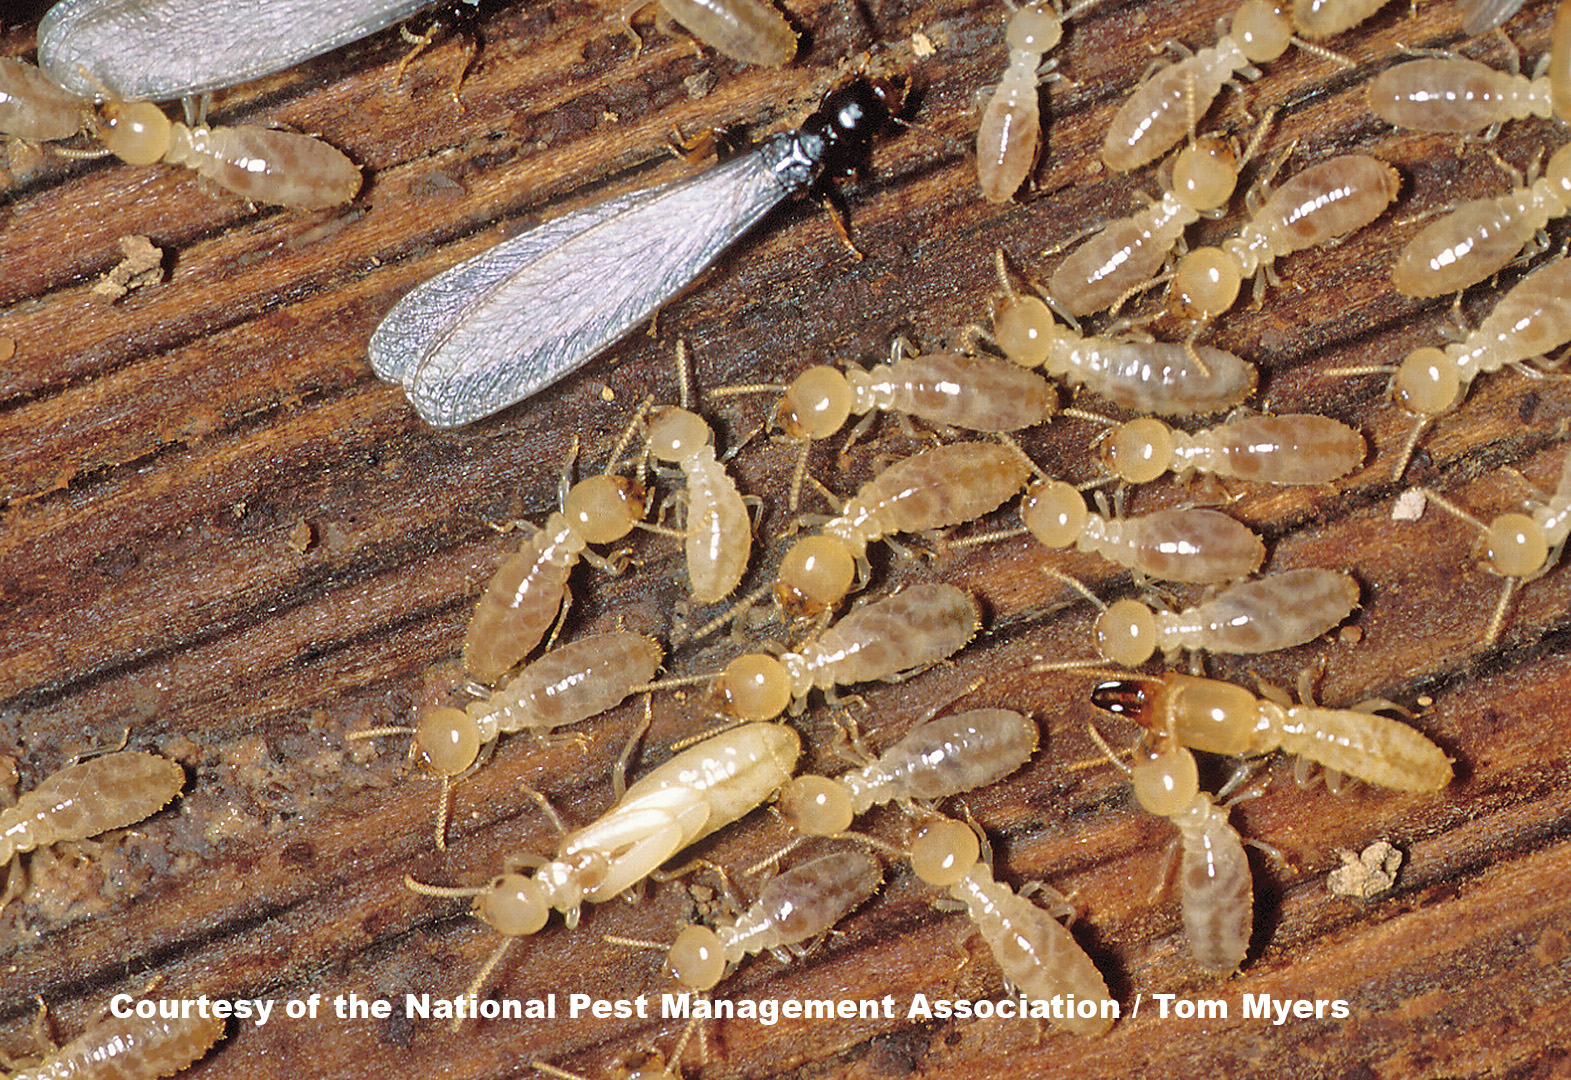 Subterranean Termites - Termite Facts for Kids